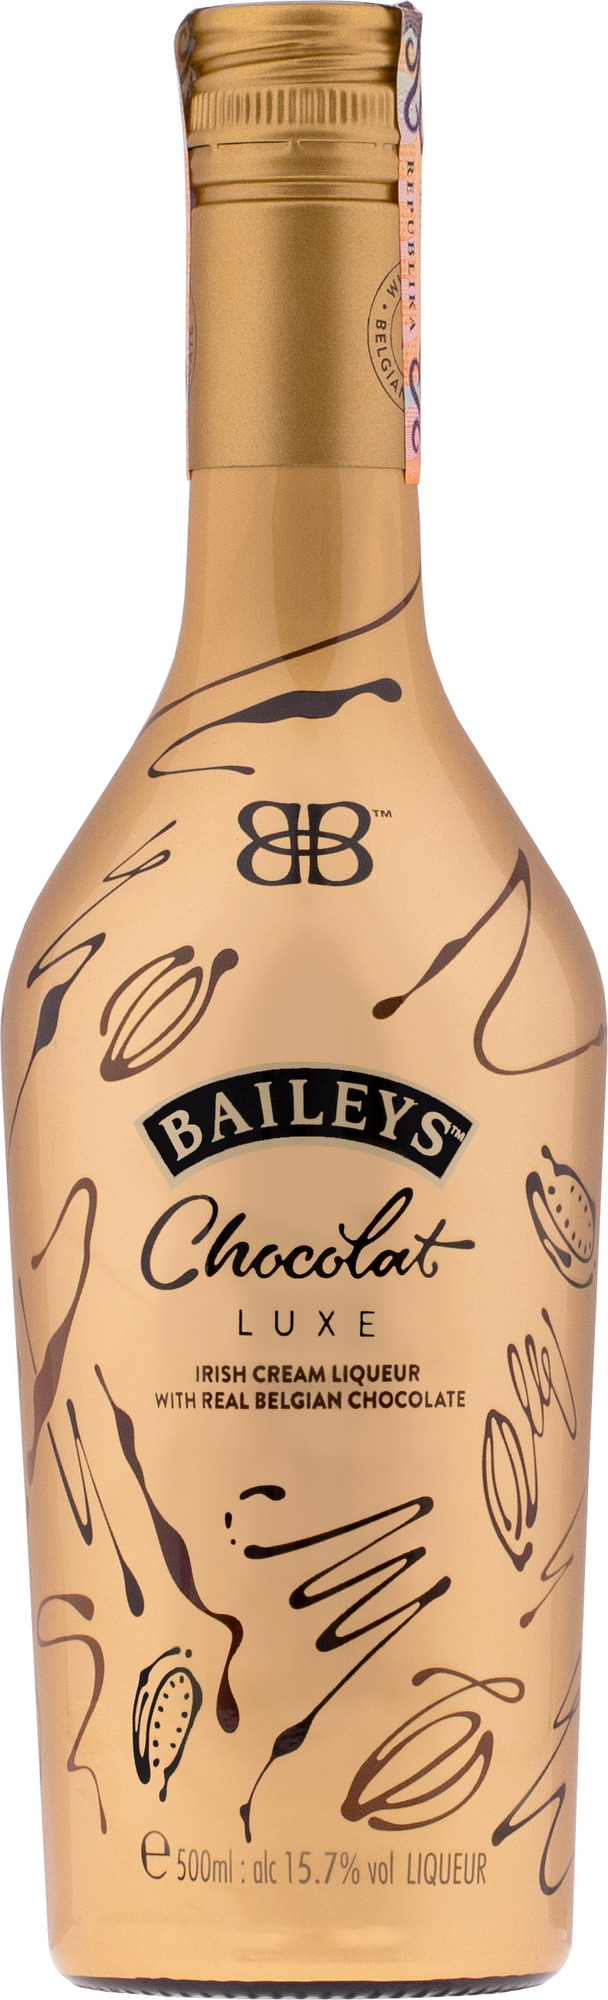 Baileys Chocolat Luxe 0,5l 15,7%